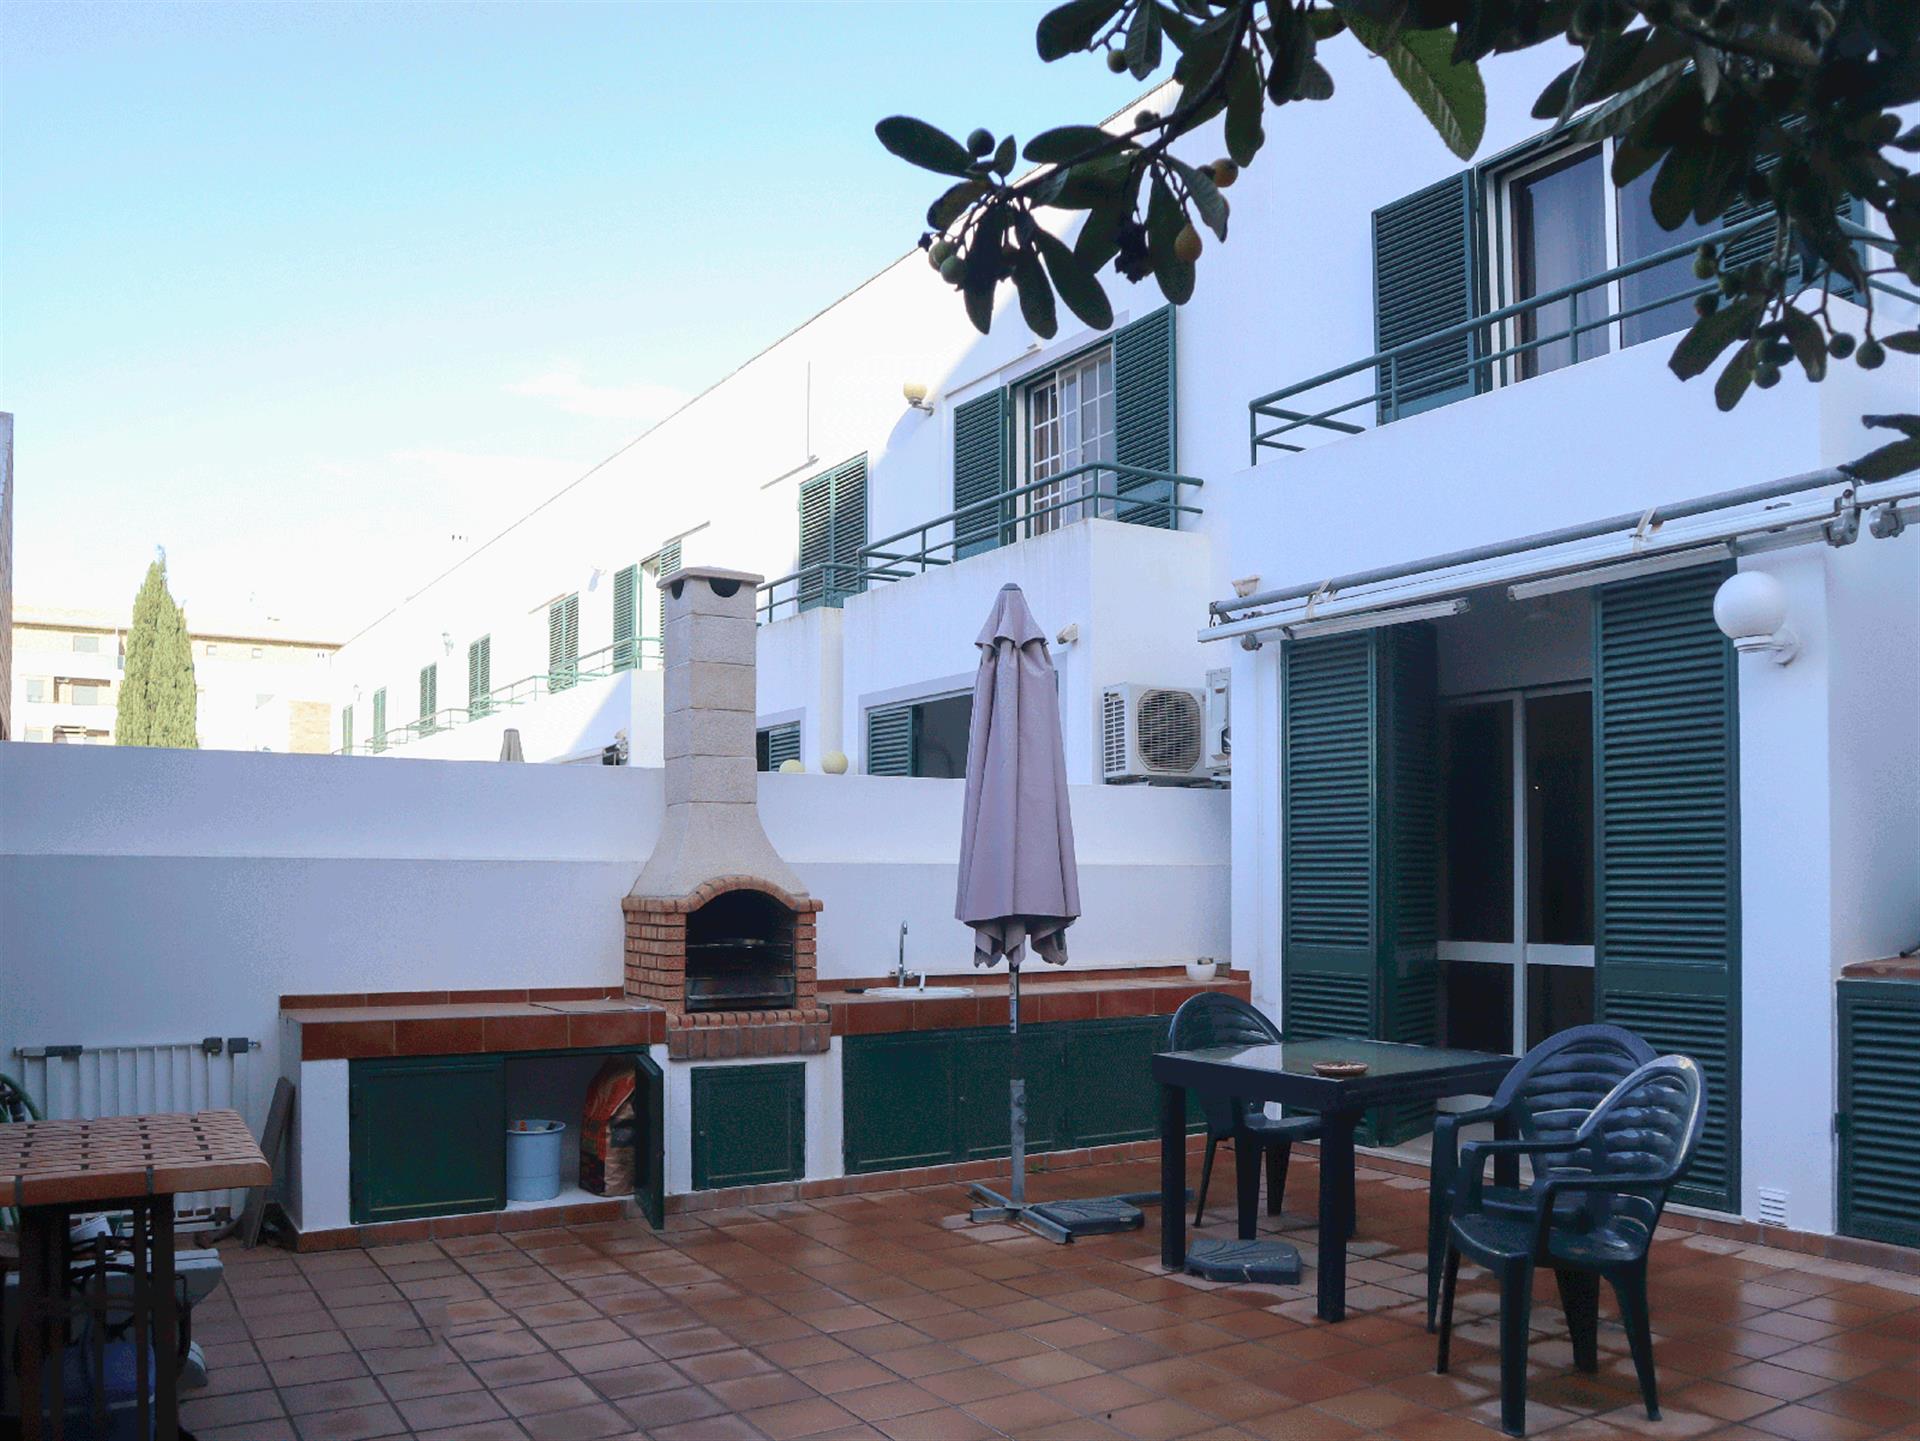 3+1 bedrooms Villa - garage - patio - Tavira Center - Algarve